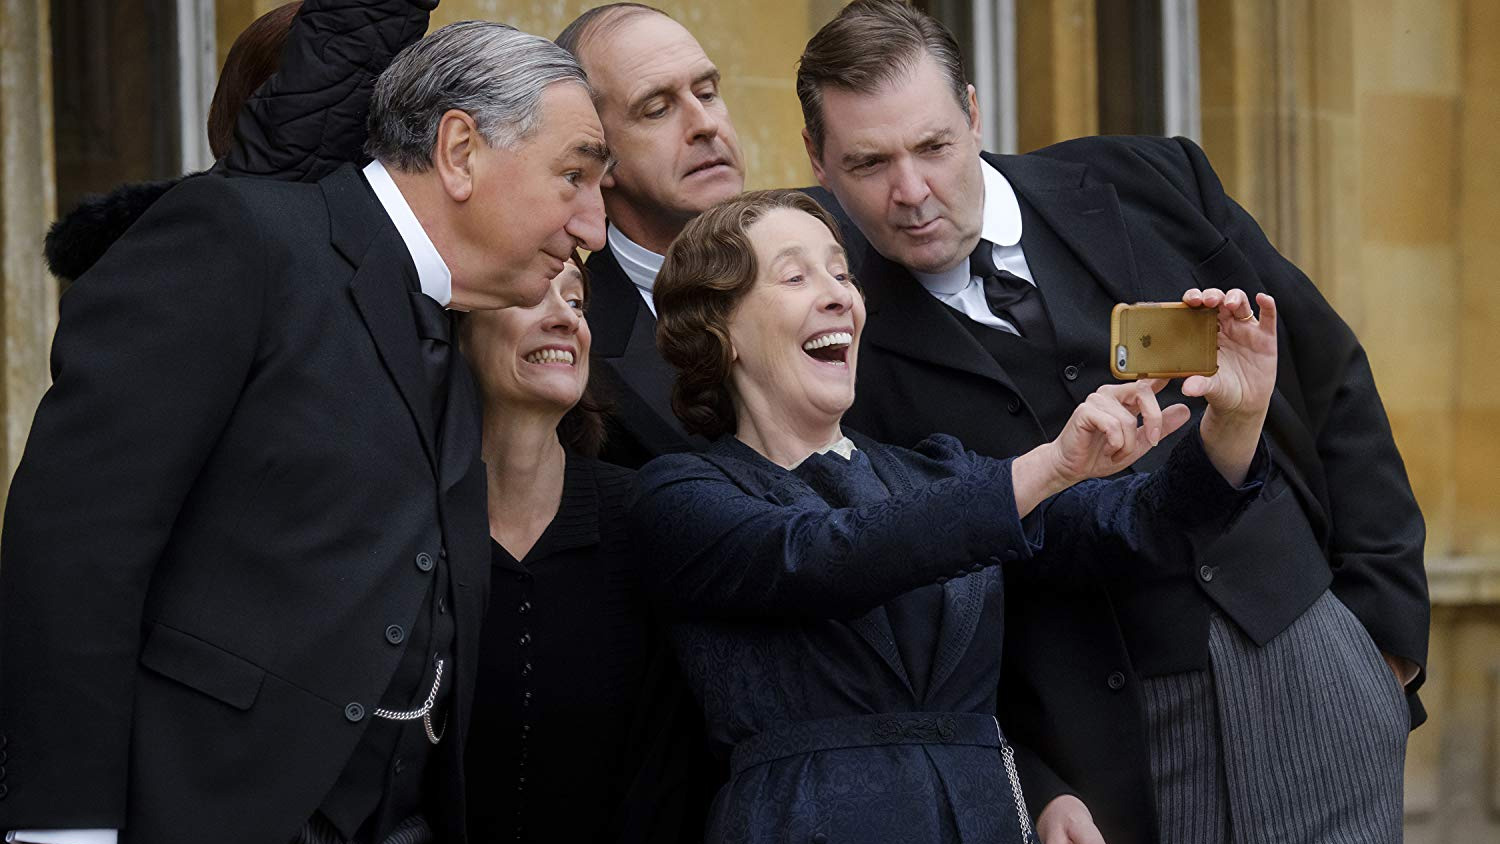 Spotkania Filmowe: Downton Abbey - napisy